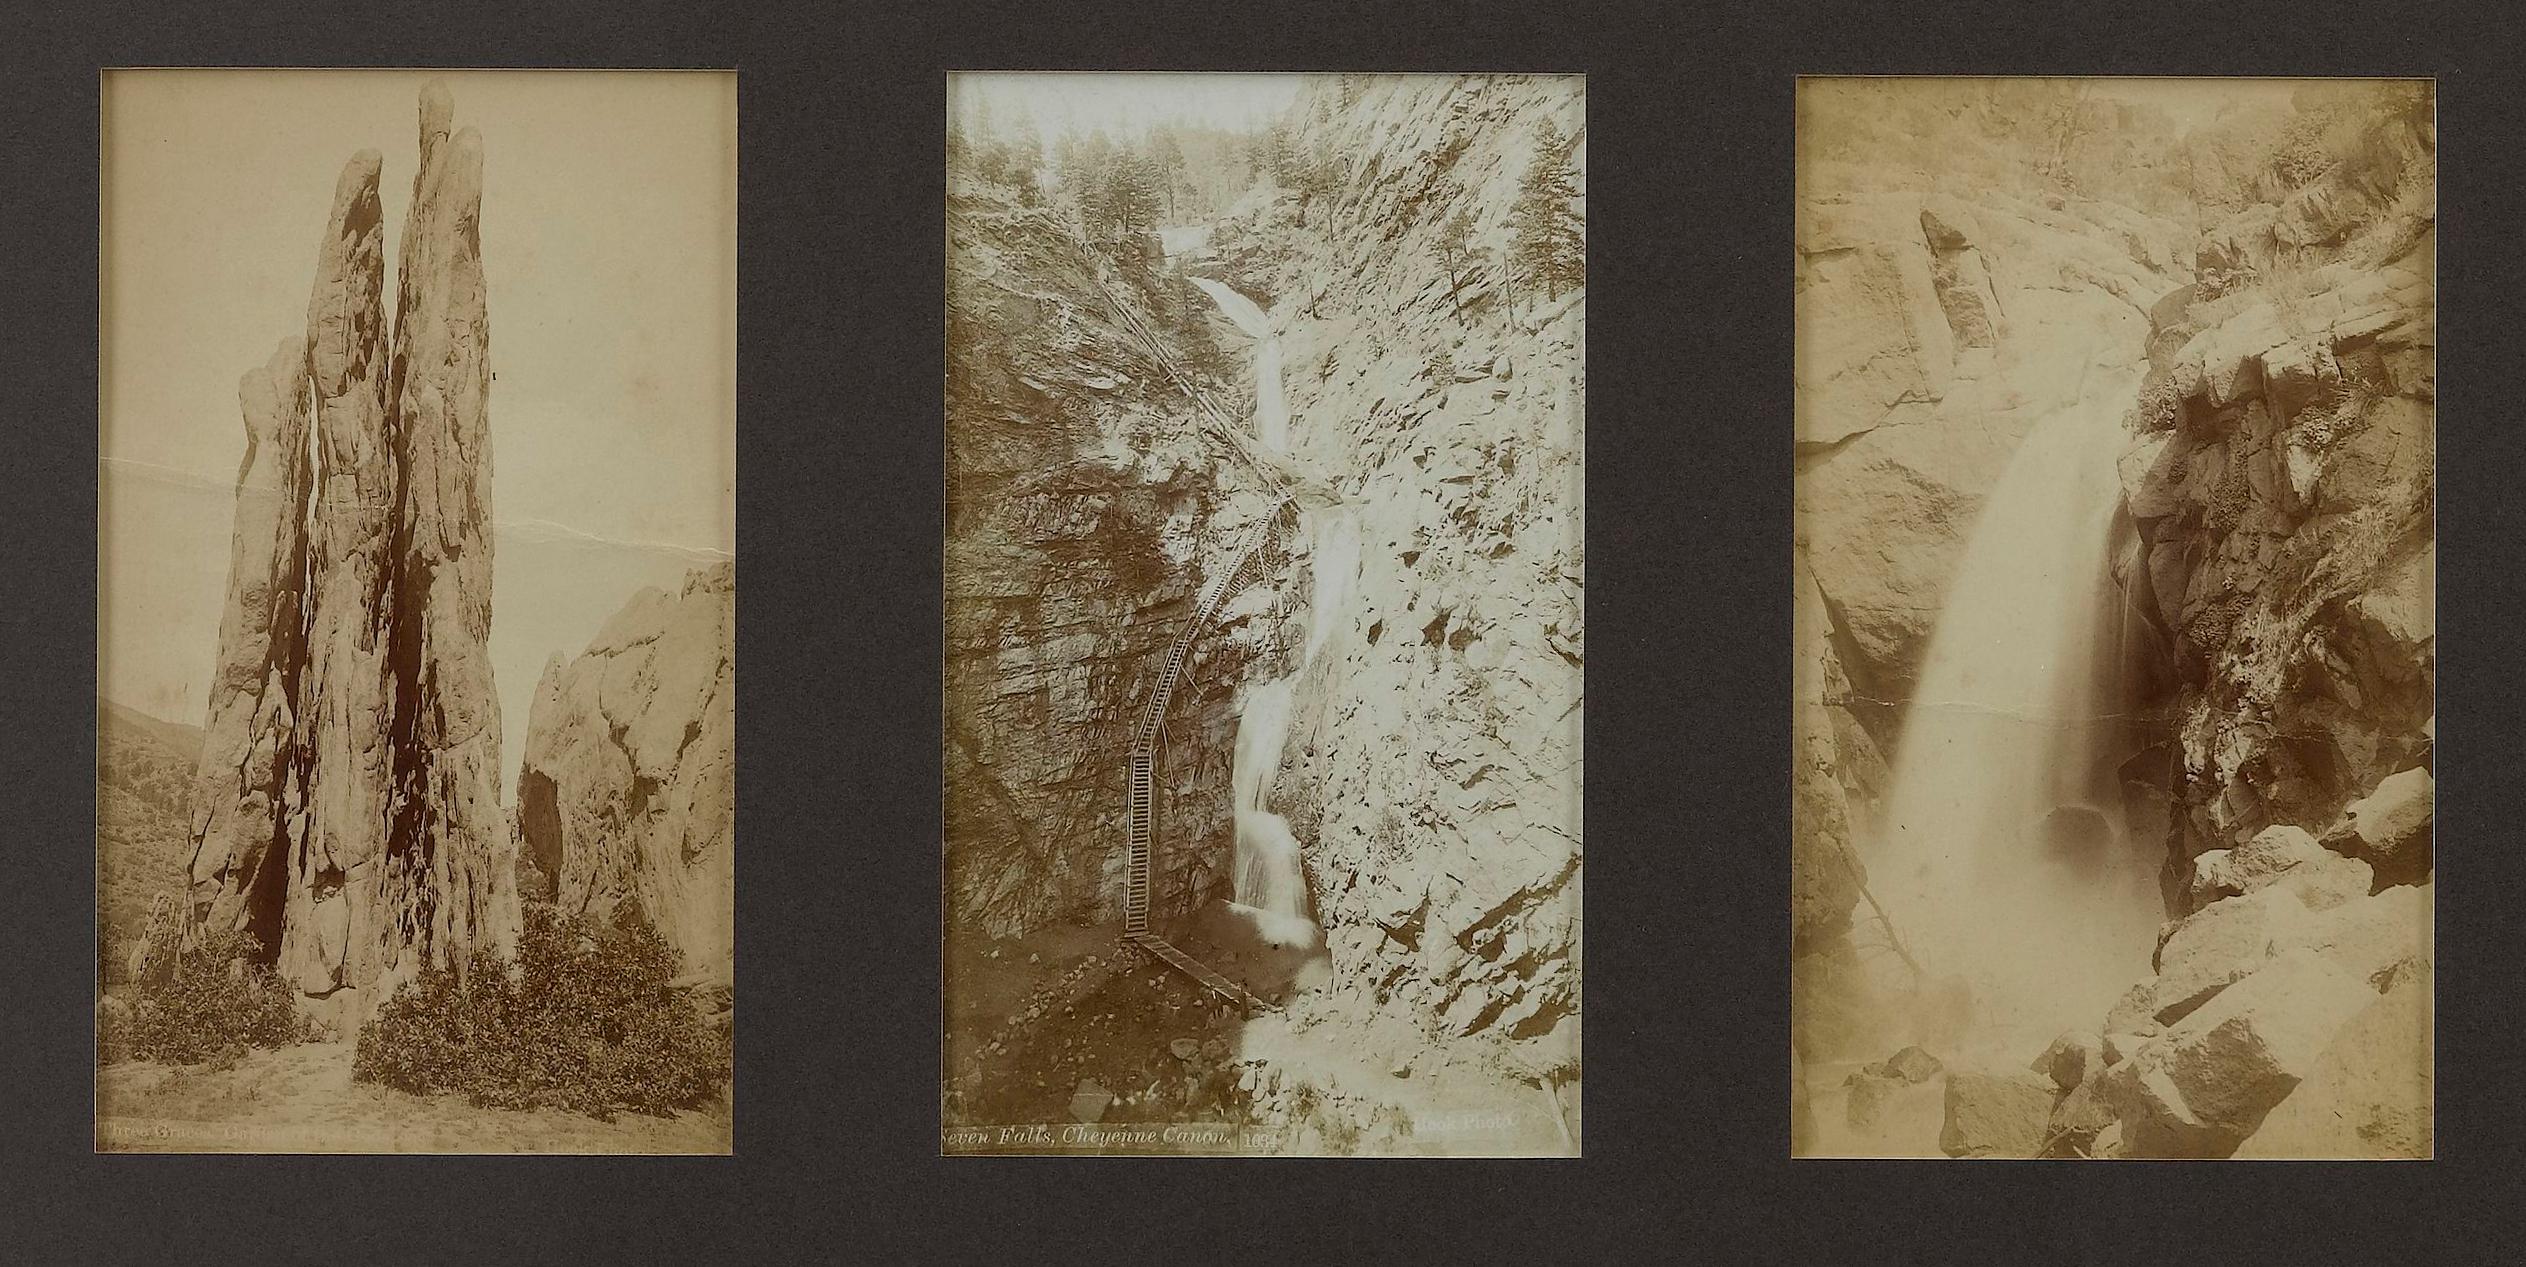 American Vintage Colorado Springs Postcards by Hook Photo, 1890